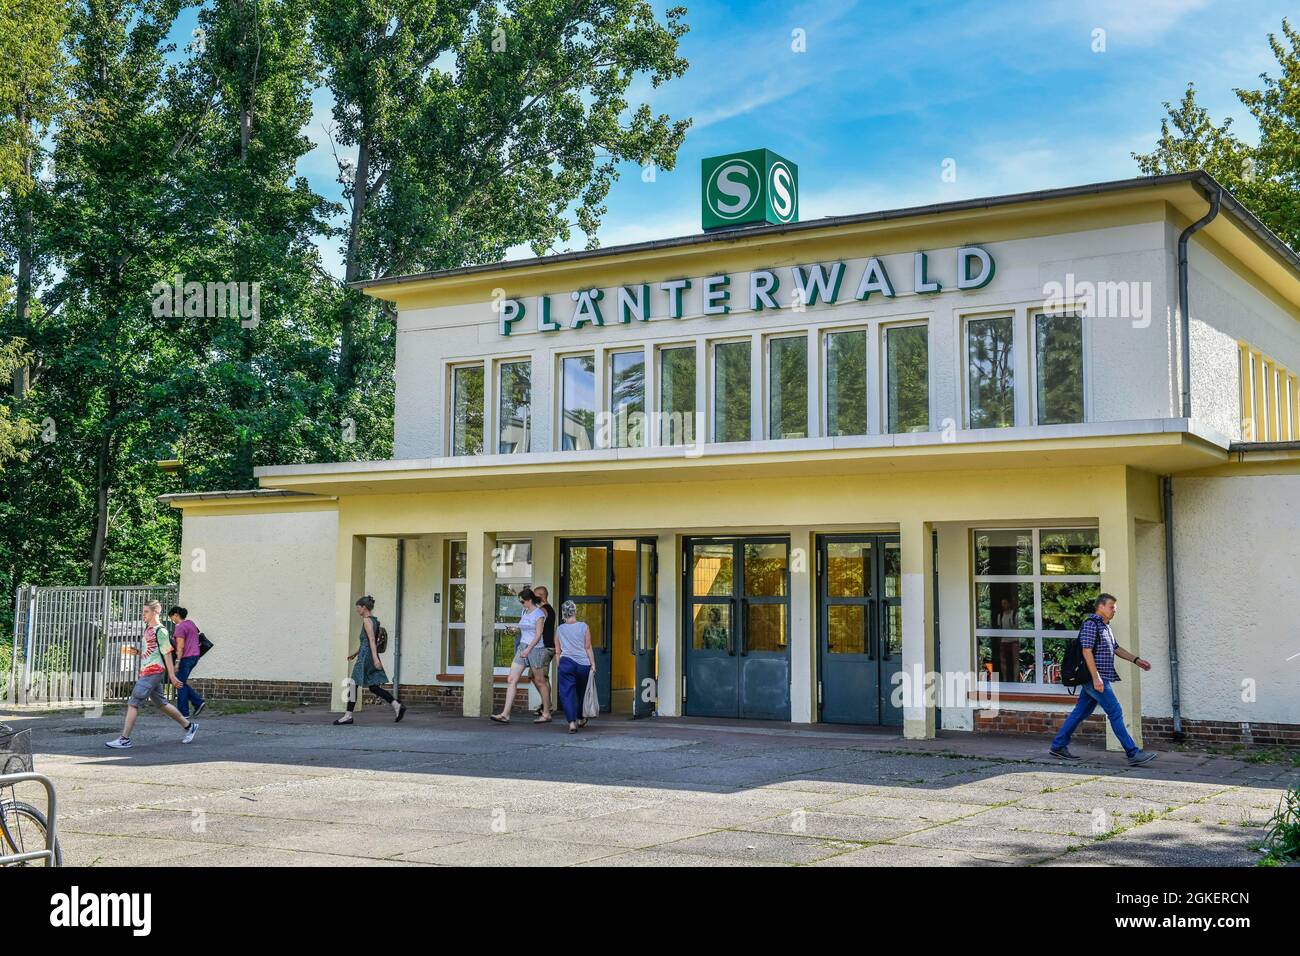 Plaenterwald S-Bahn station, Treptow-Koepenick, Berlin, Germany Stock Photo